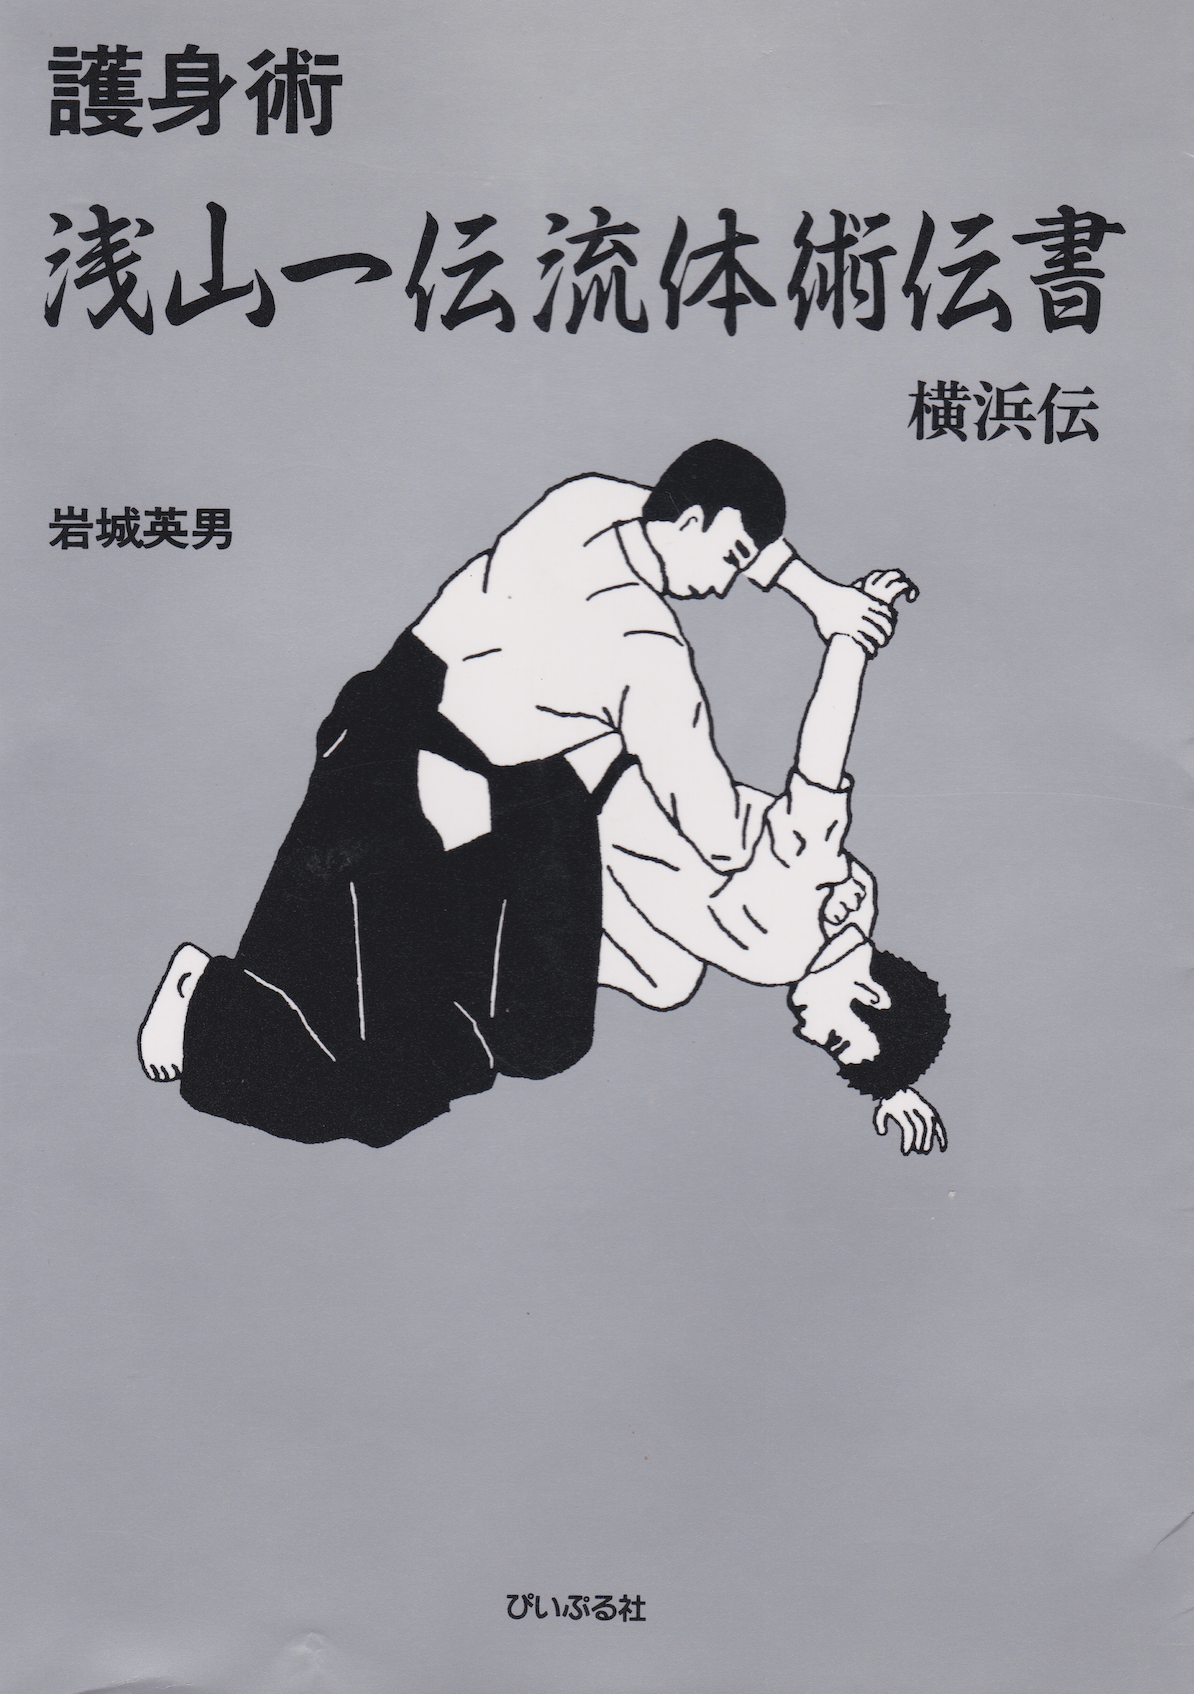 Libro de autodefensa Asayama Ichiden Ryu de Hideo Iwaki (usado)